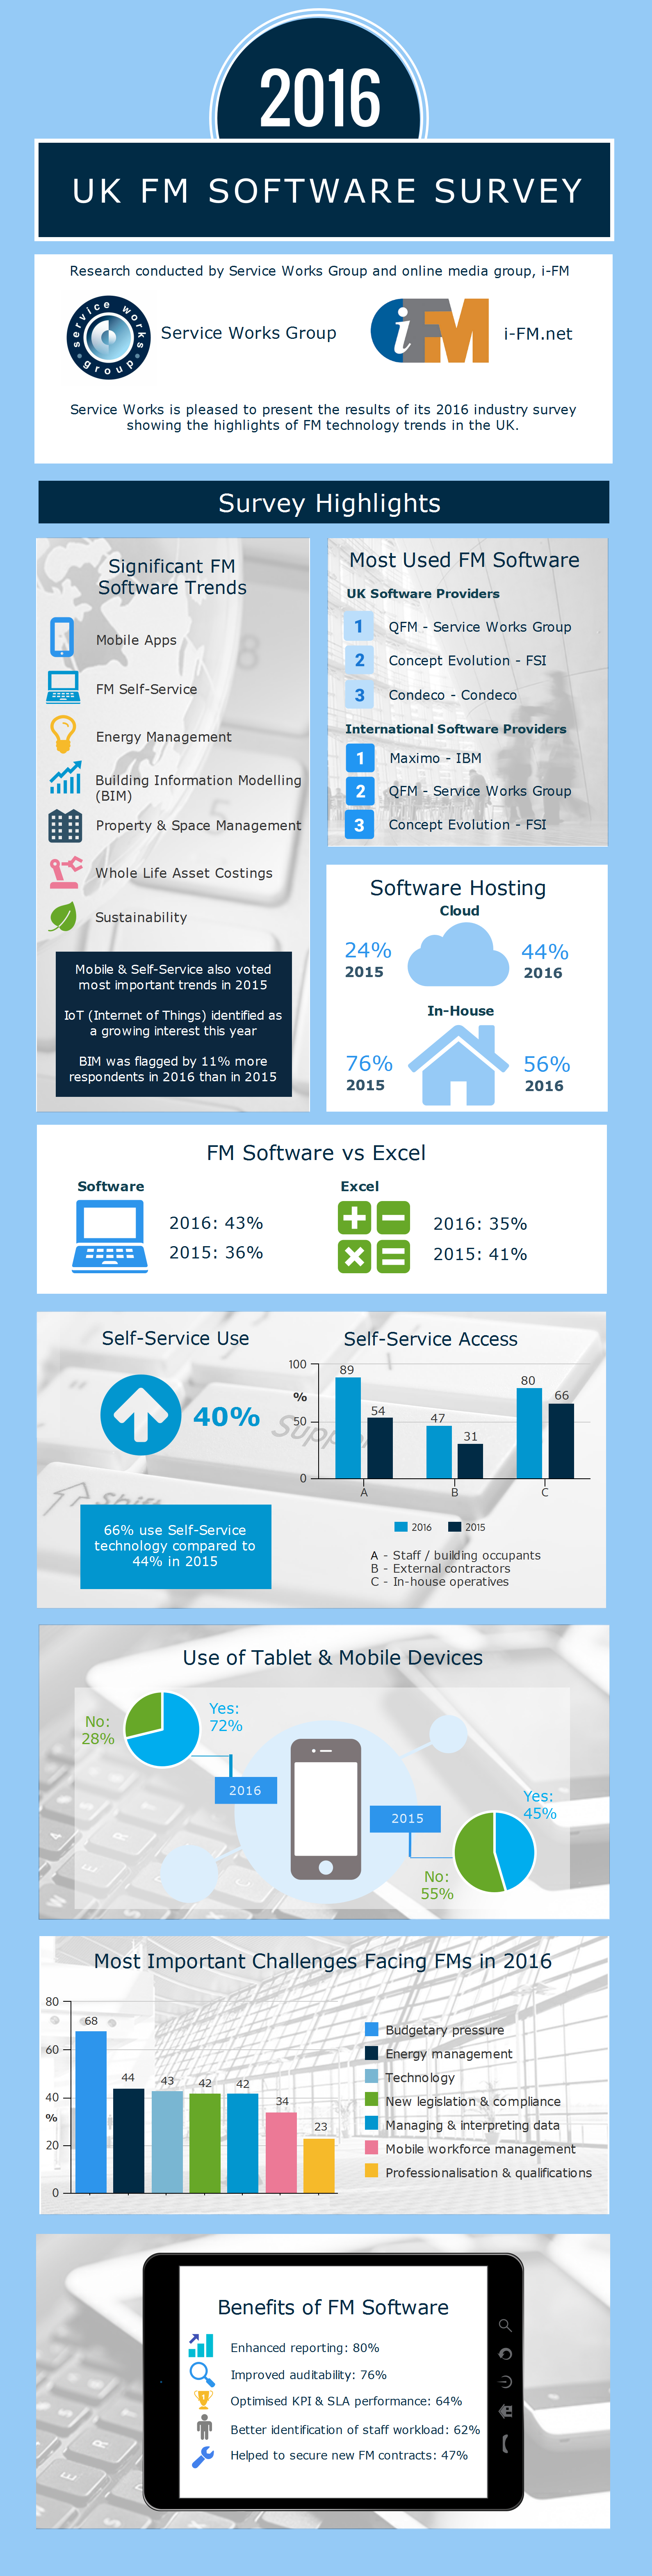 CAFM Survey Infographic - Survey Highlights 2016